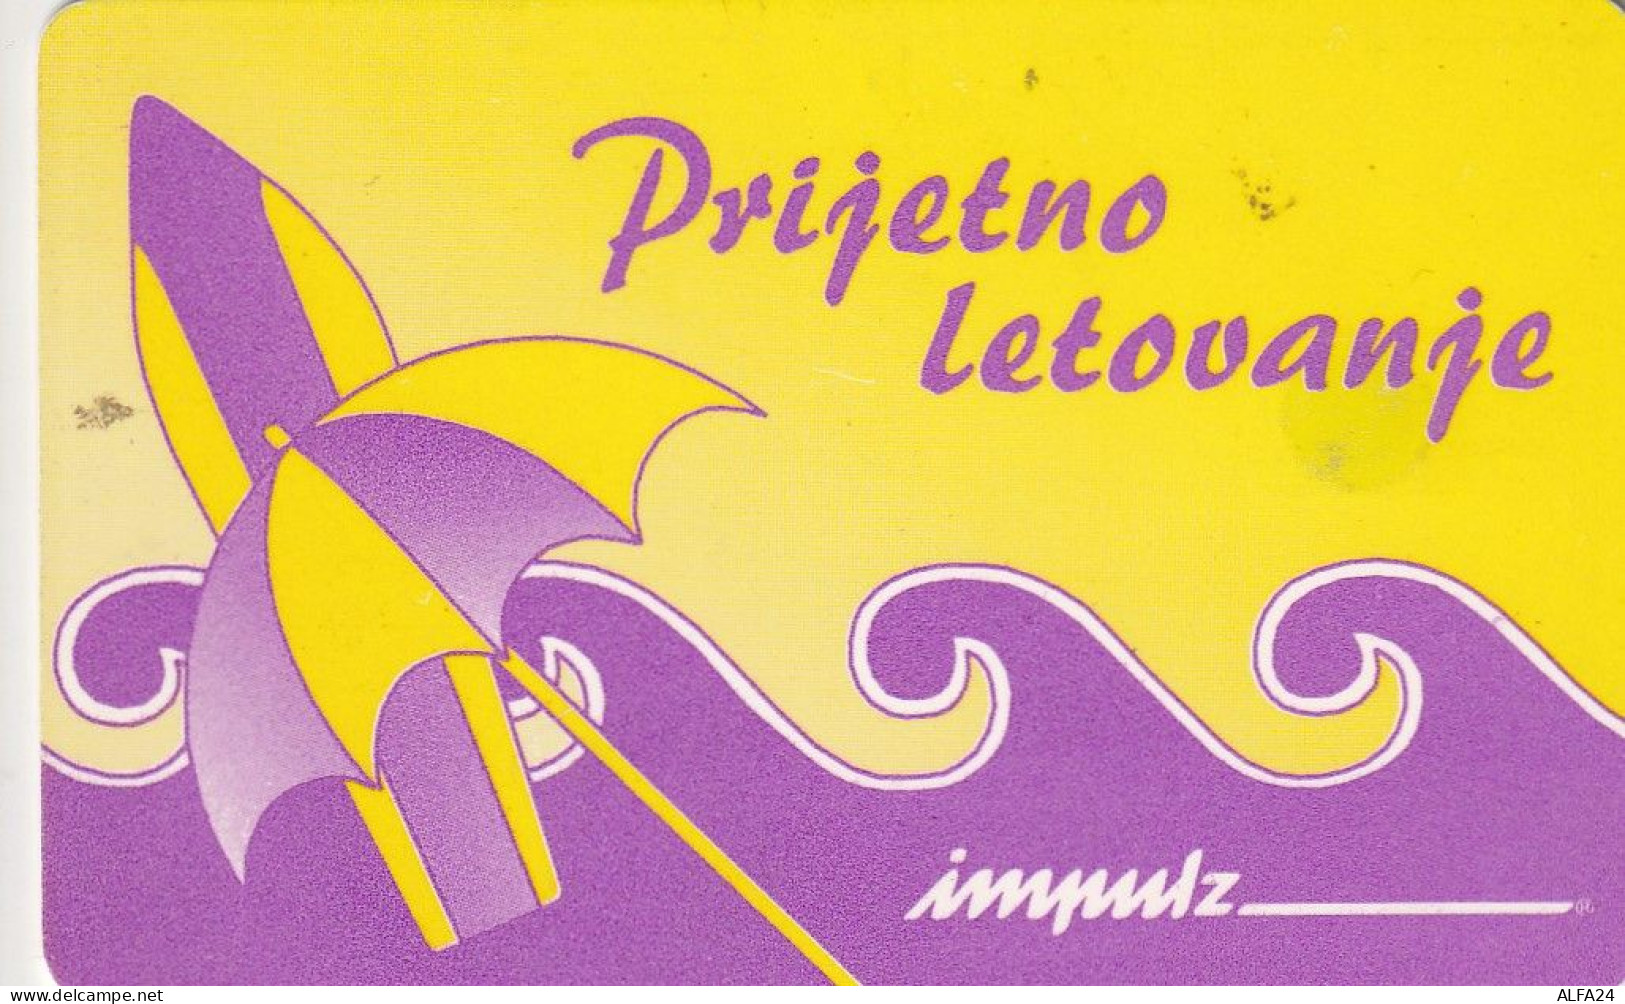 PHONE CARD SLOVENIA (E24.7.3 - Slowenien